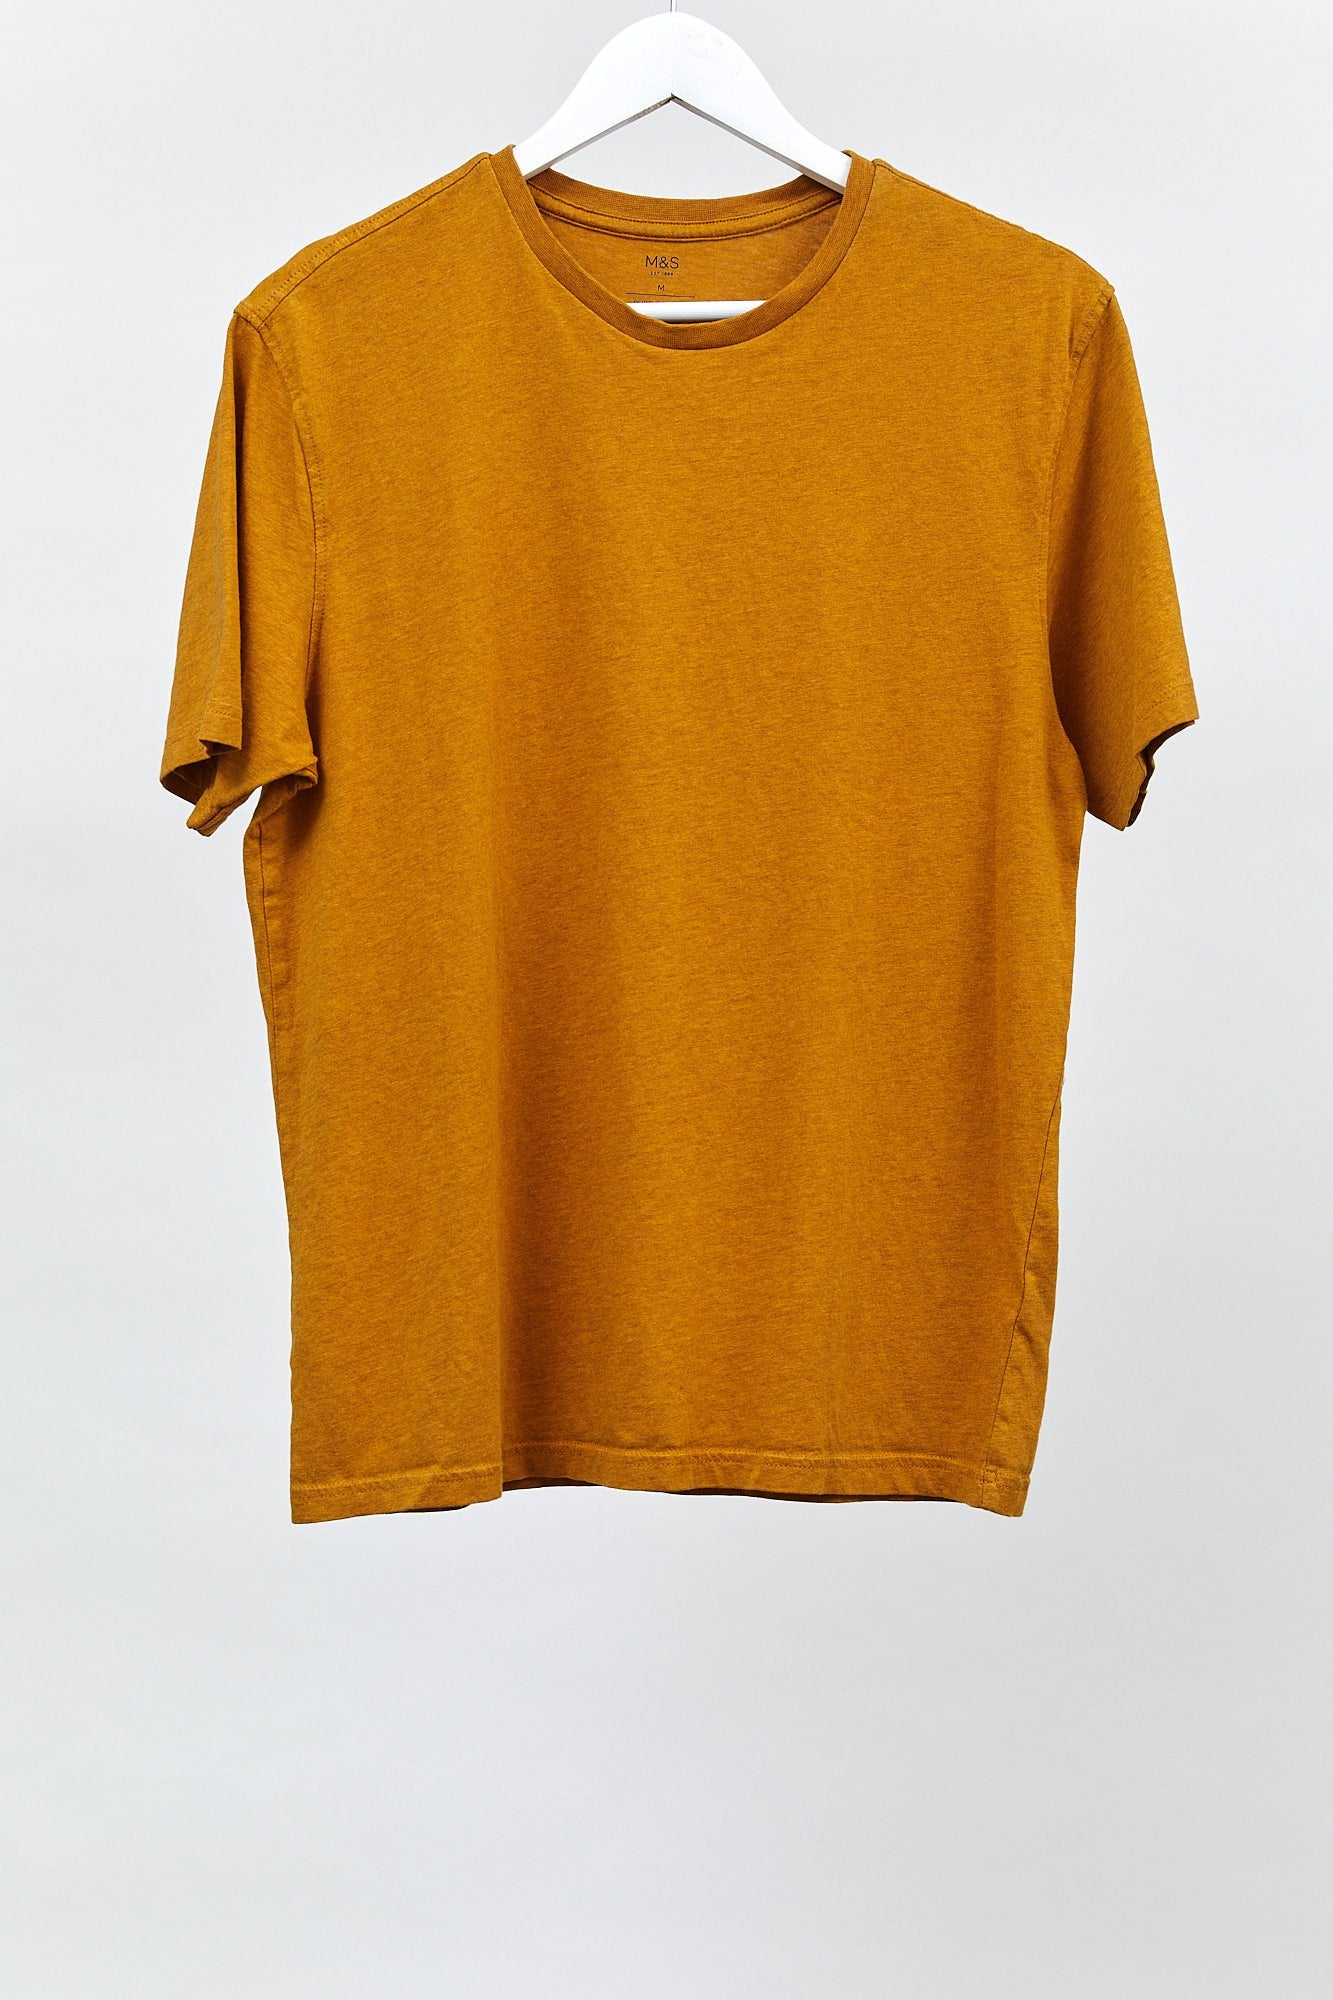 Mens Yellow T-Shirt: Size Medium